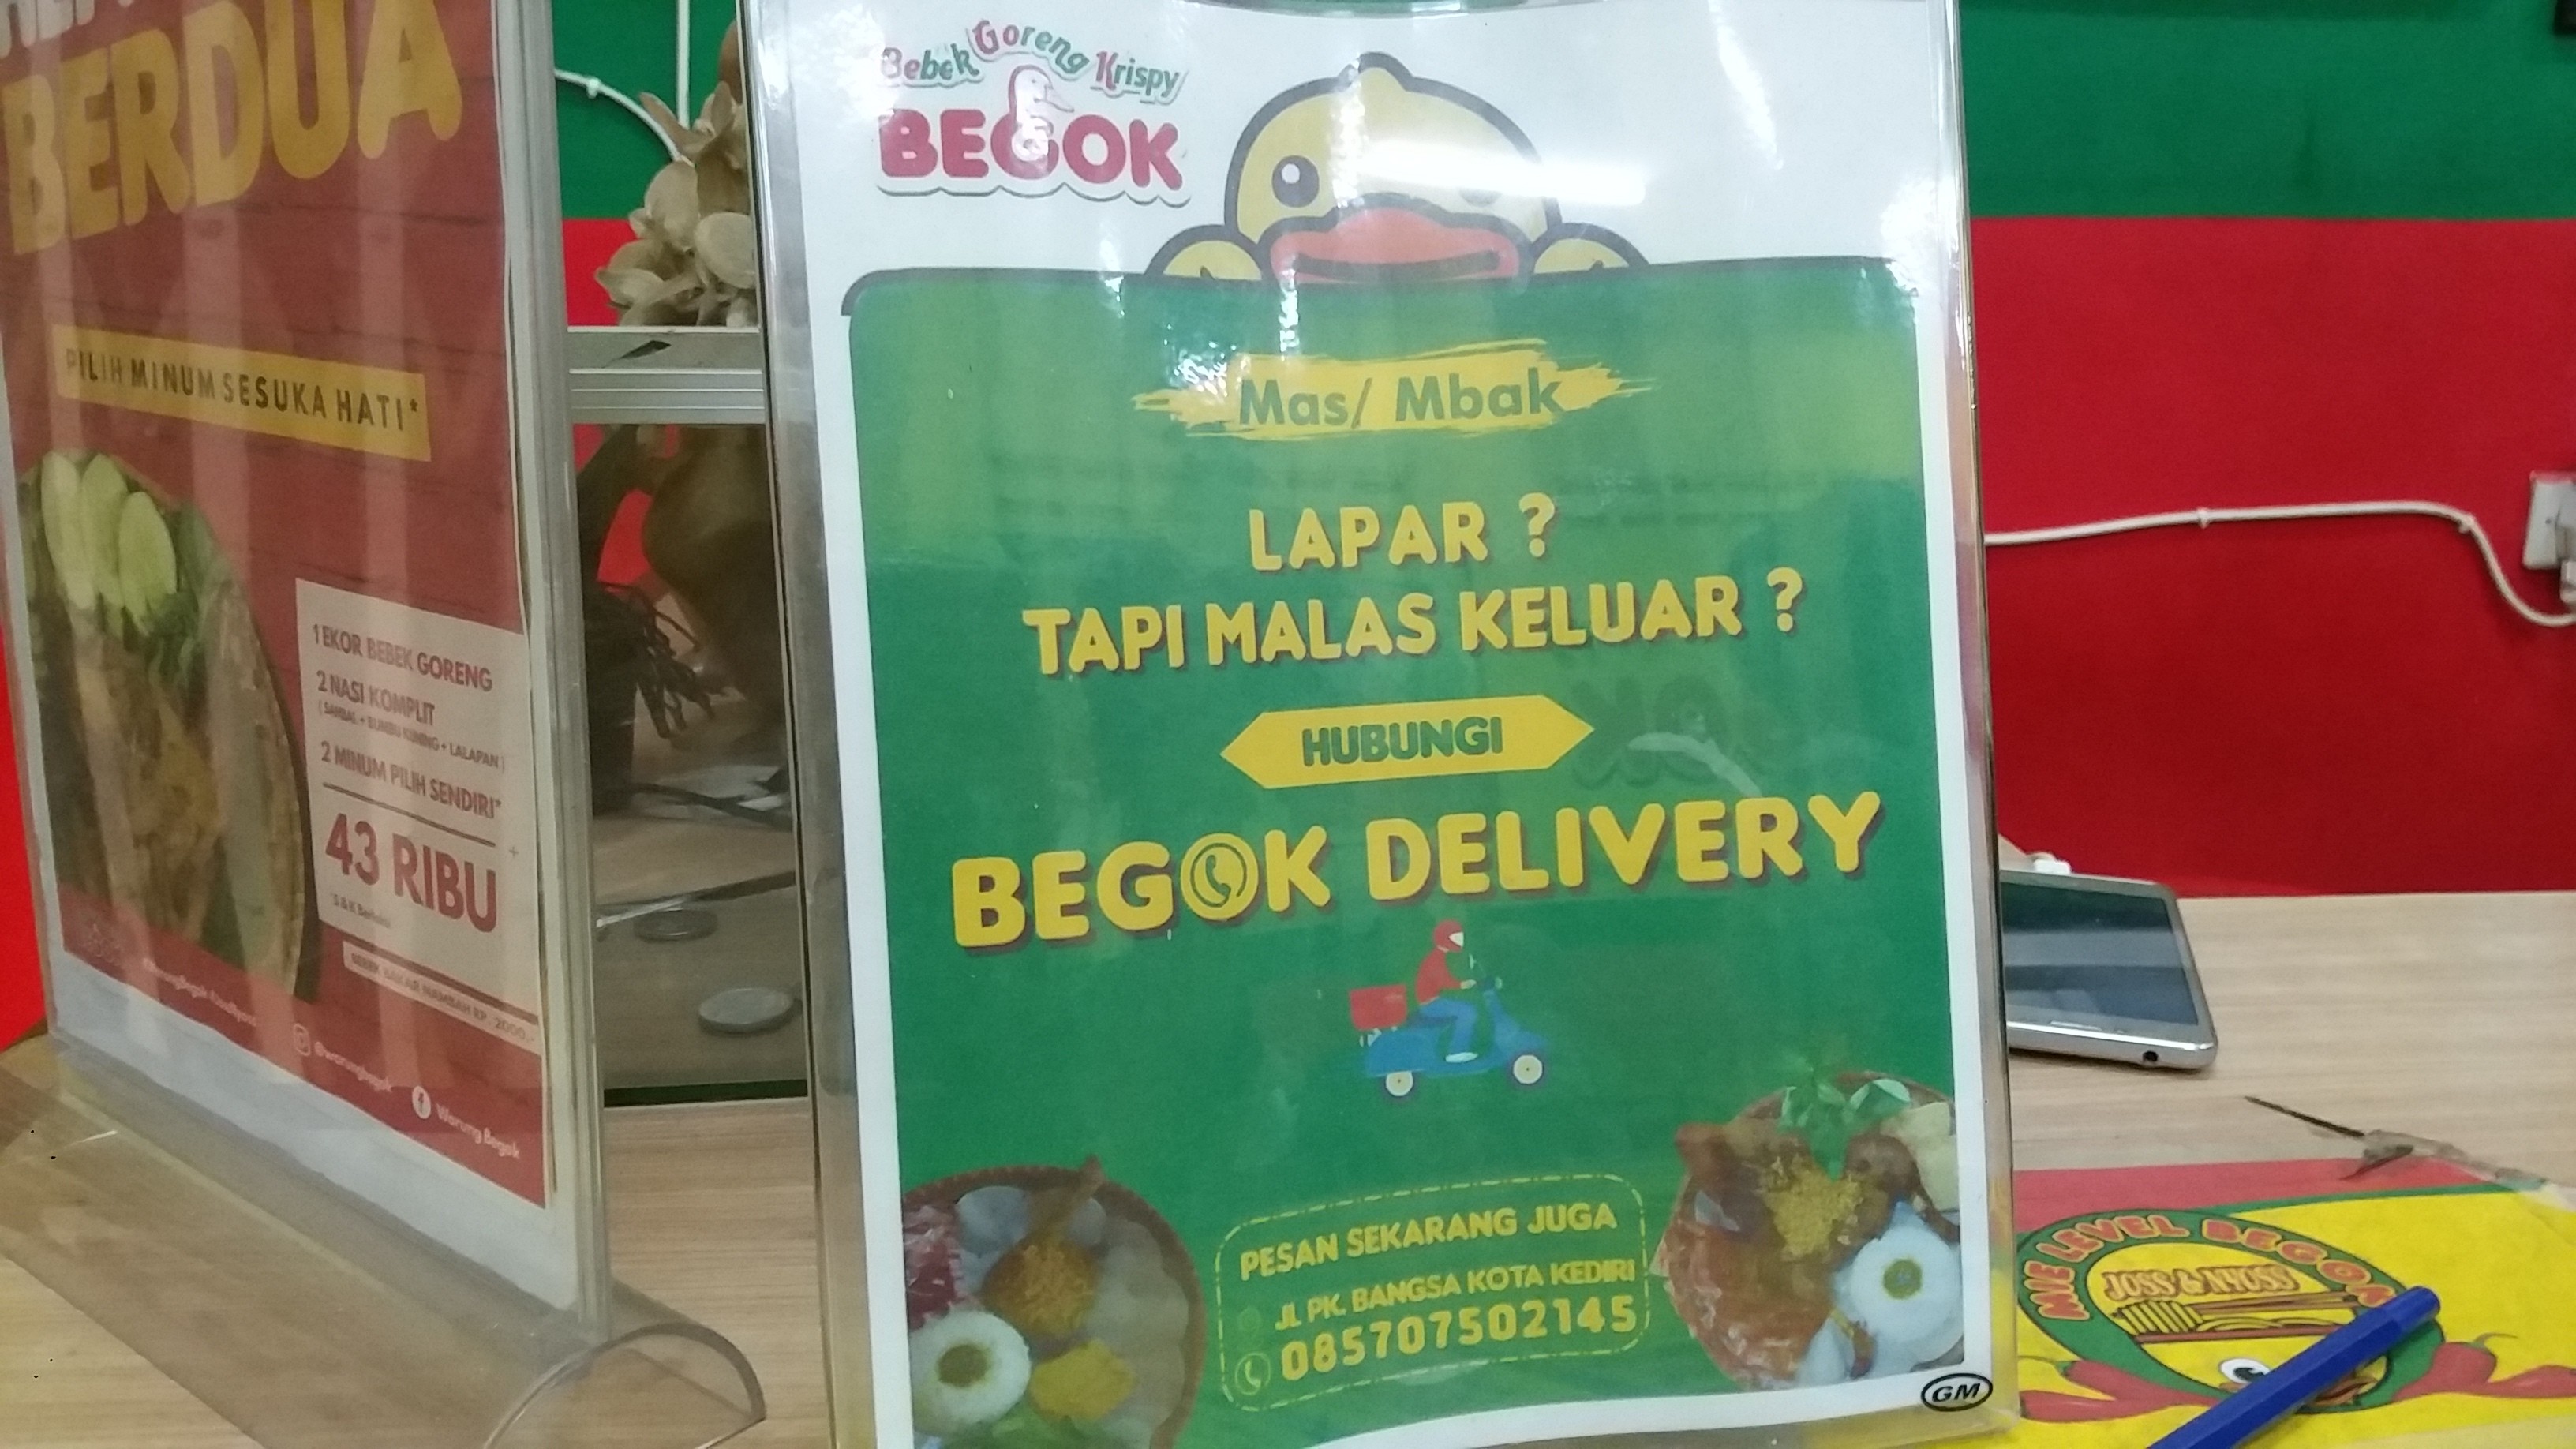 Begok Delivery (c) Alviani Suwoko/Travelingyuk